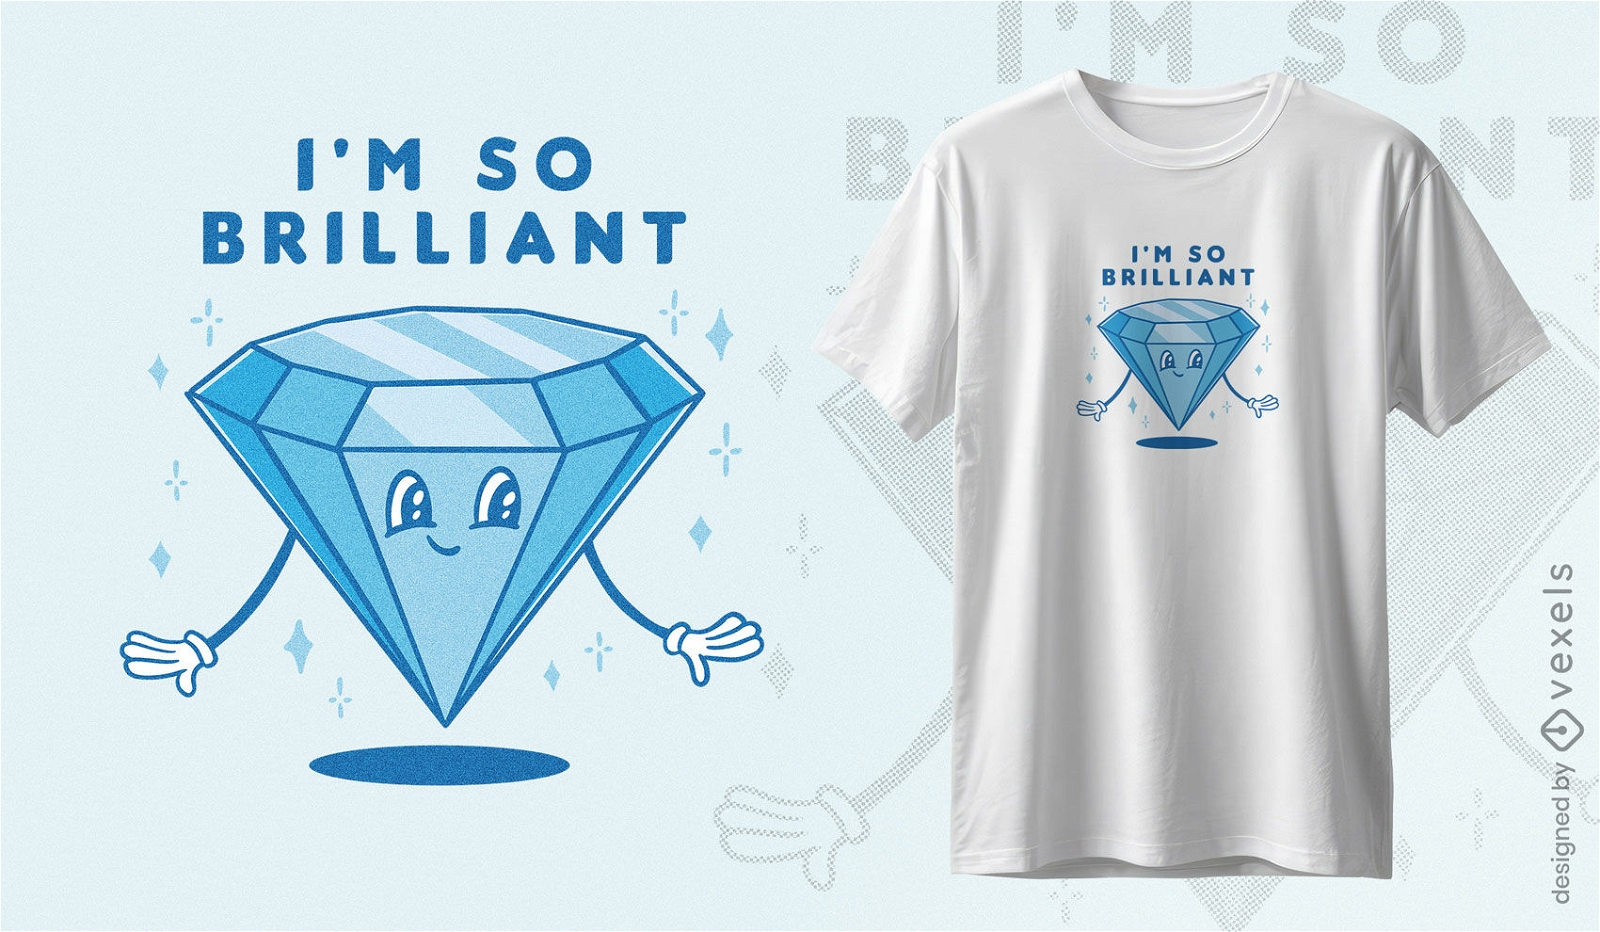 Brilliant diamond t-shirt design